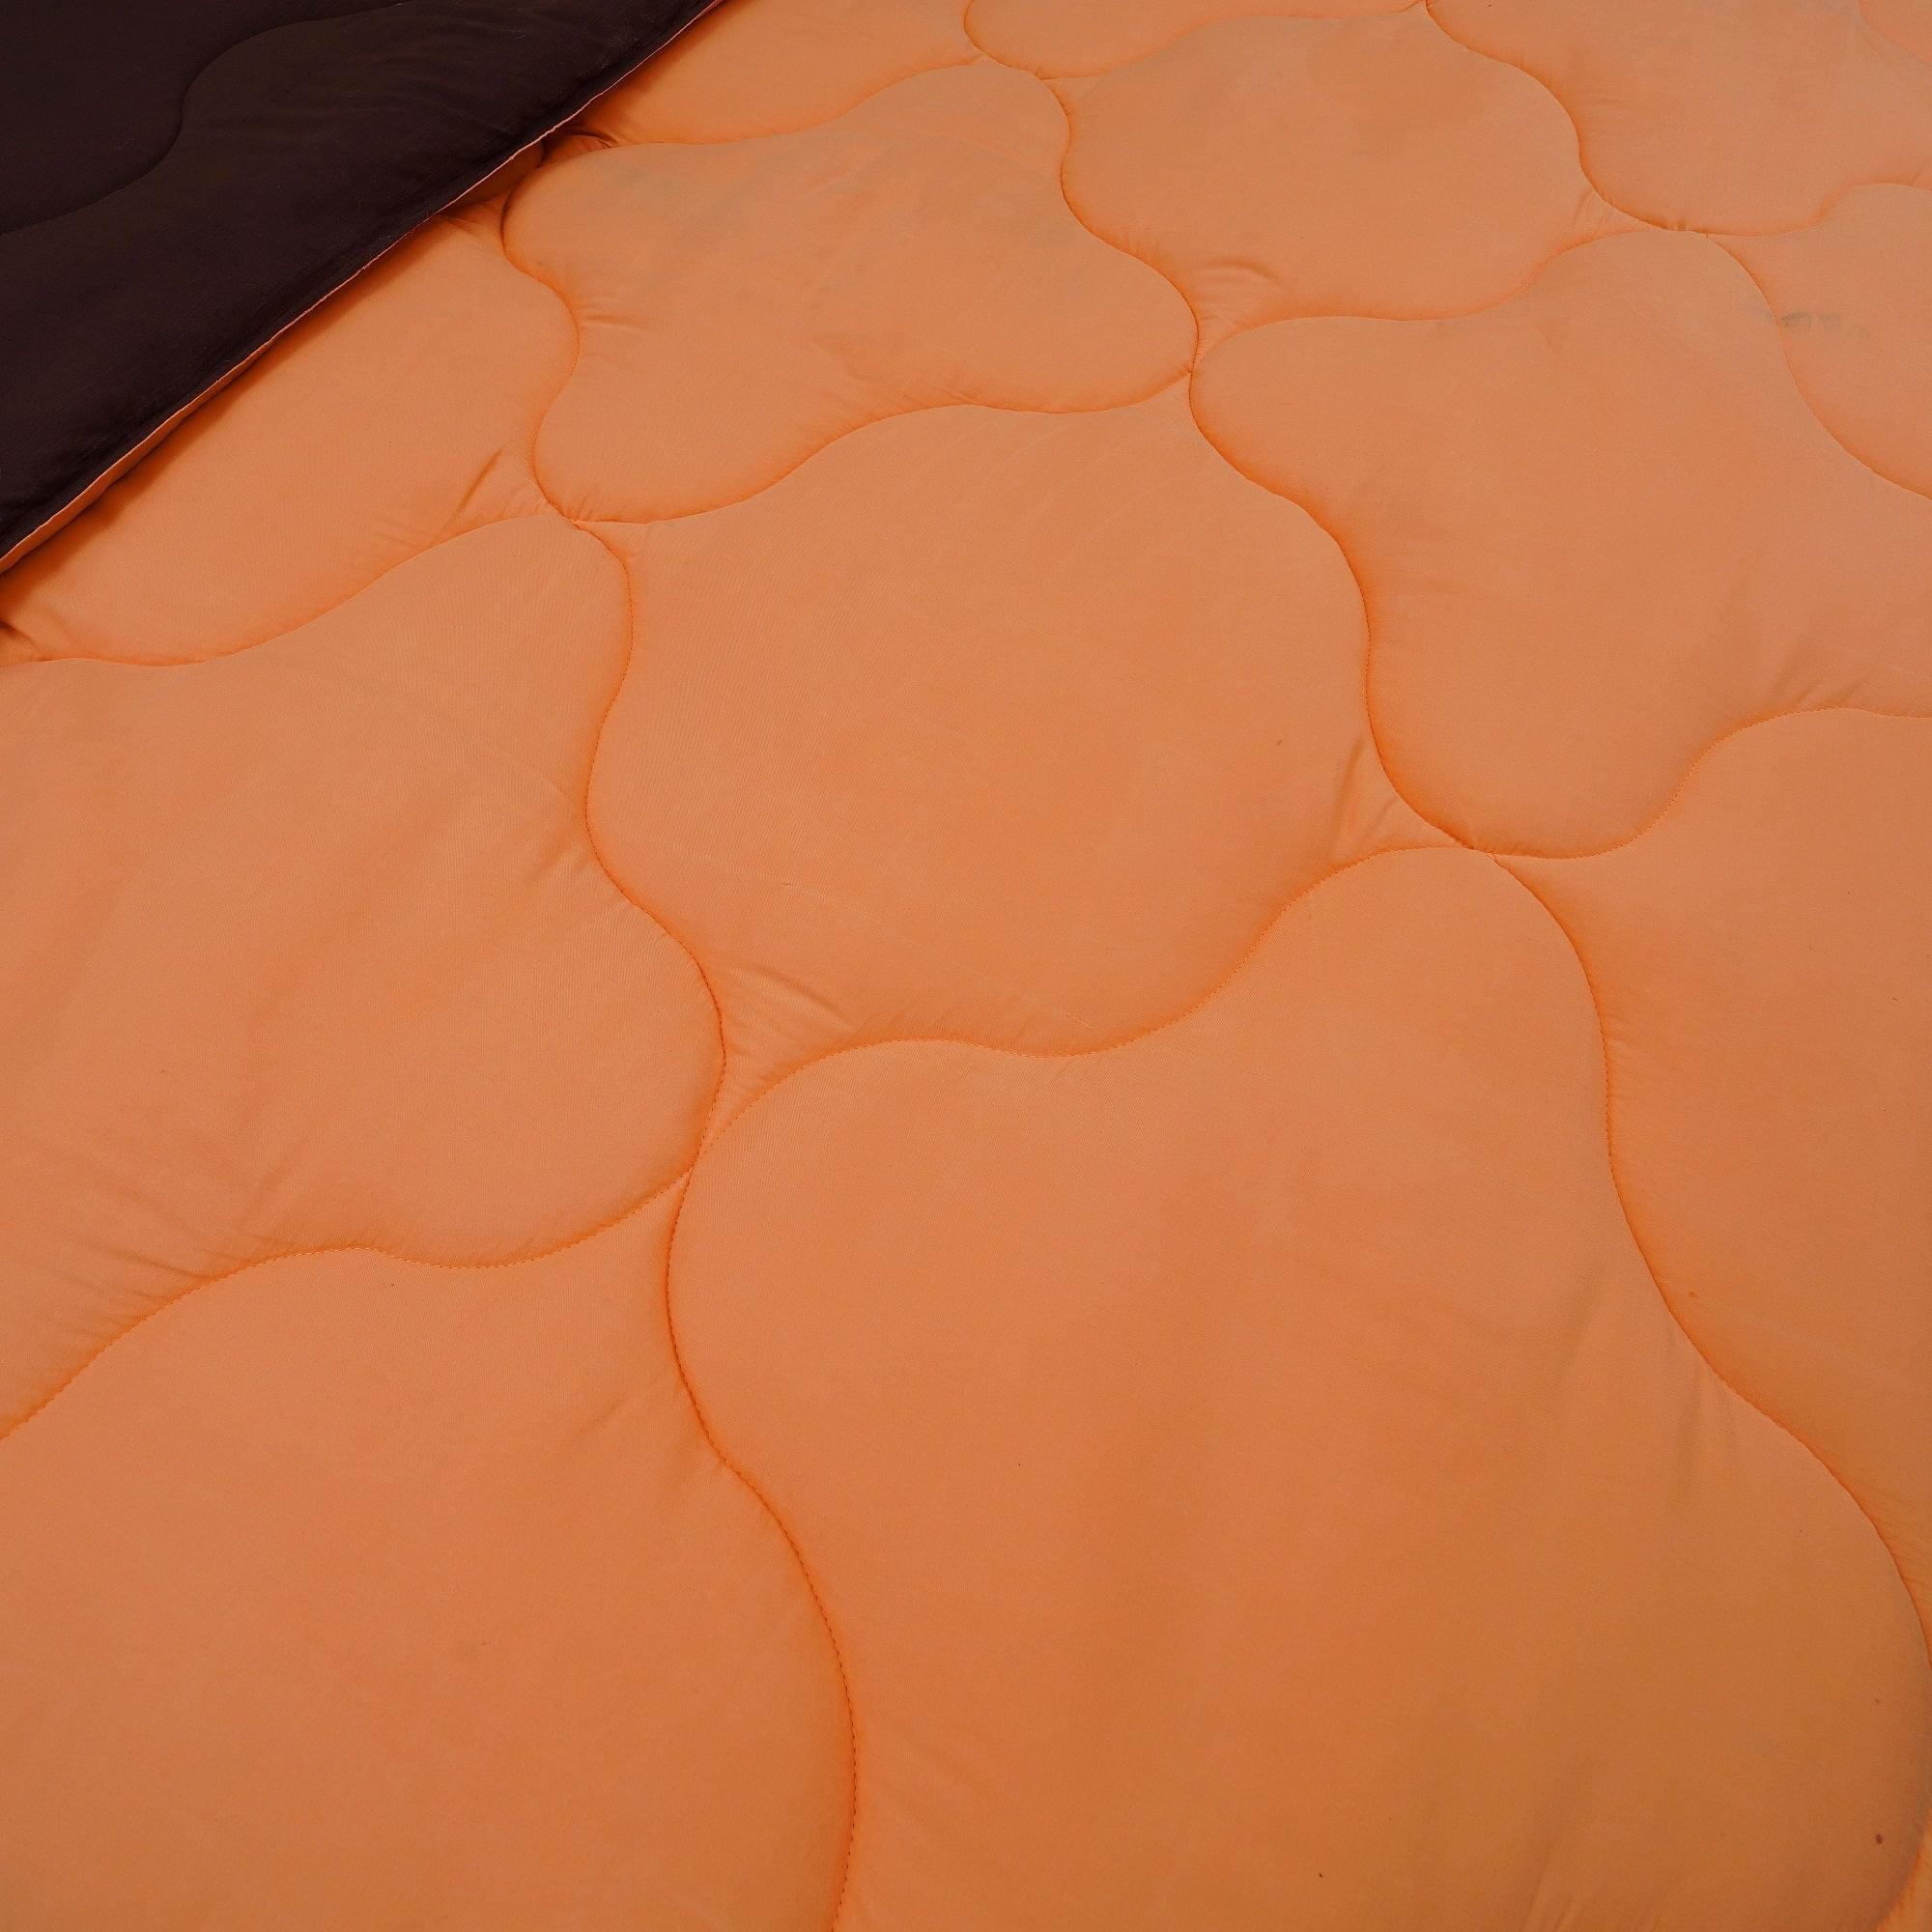 AC Comforter Blanket, Microfiber Reversible (Coffee, Peach)